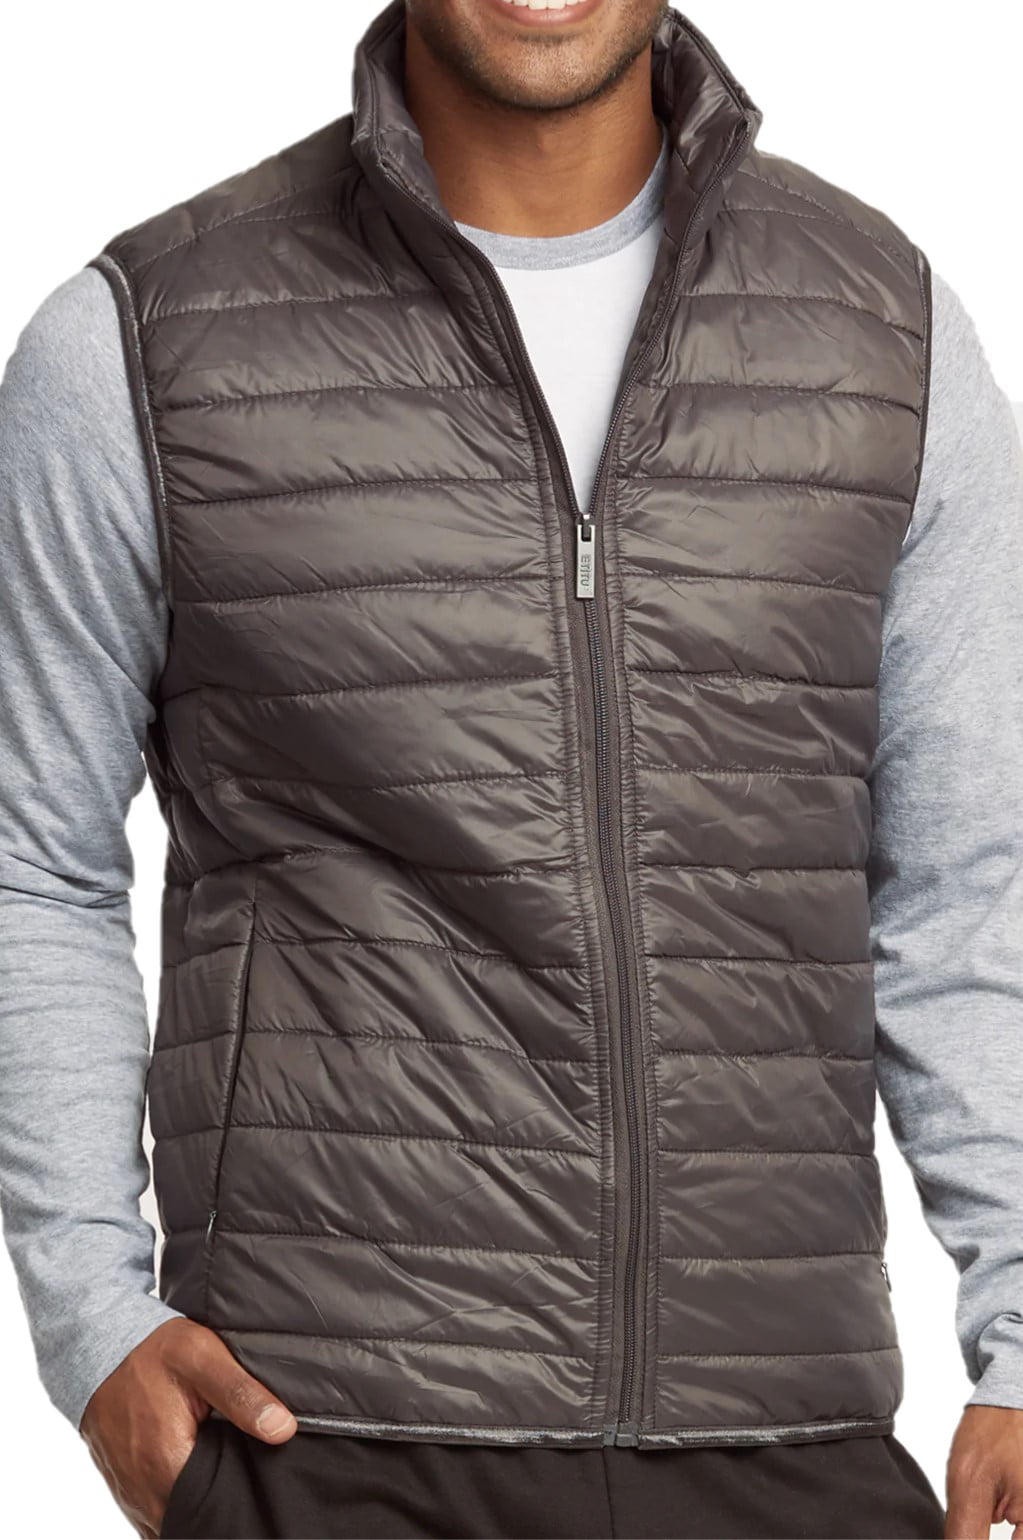 Men's Lightweight Full Zip Puffer Vest, Grey XL, 1 Count, 1 Pack 